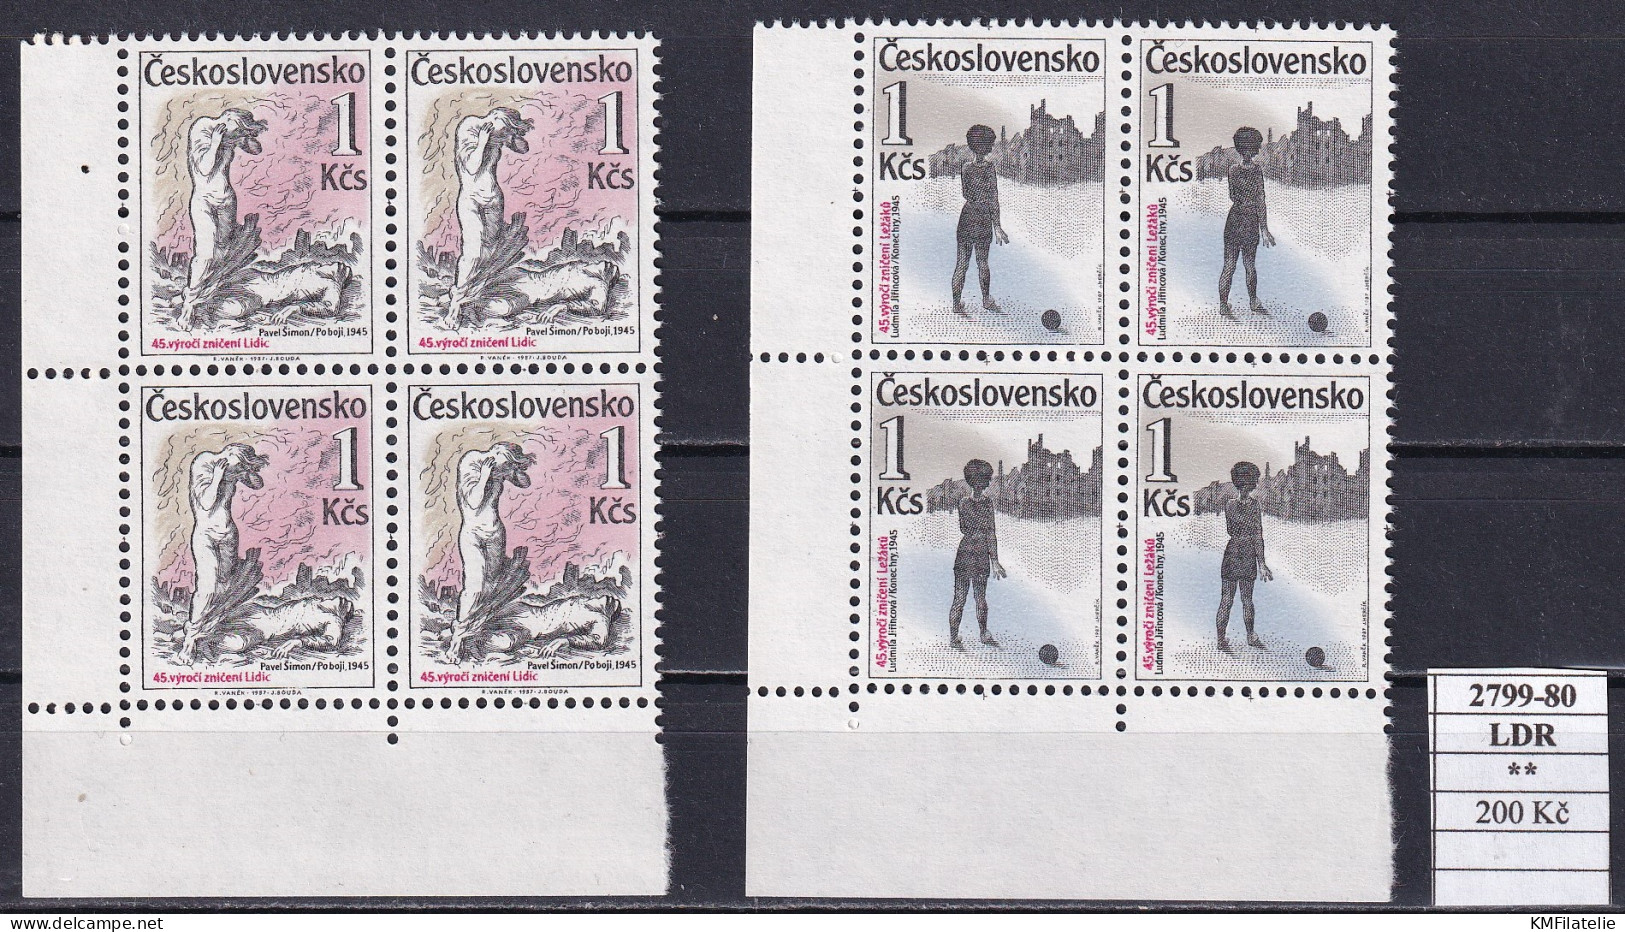 Czechoslovakia Pofis 2799-80 LDR MNH - Unused Stamps